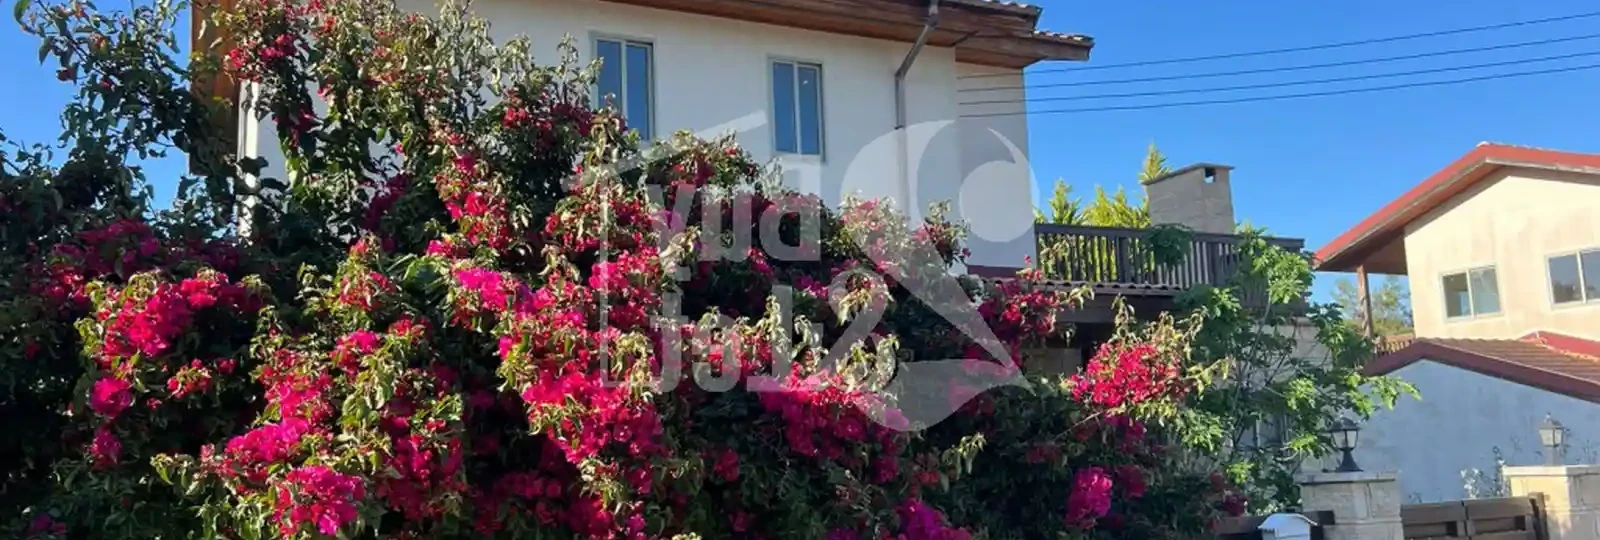 3-bedroom villa fоr sаle €550.000, image 1